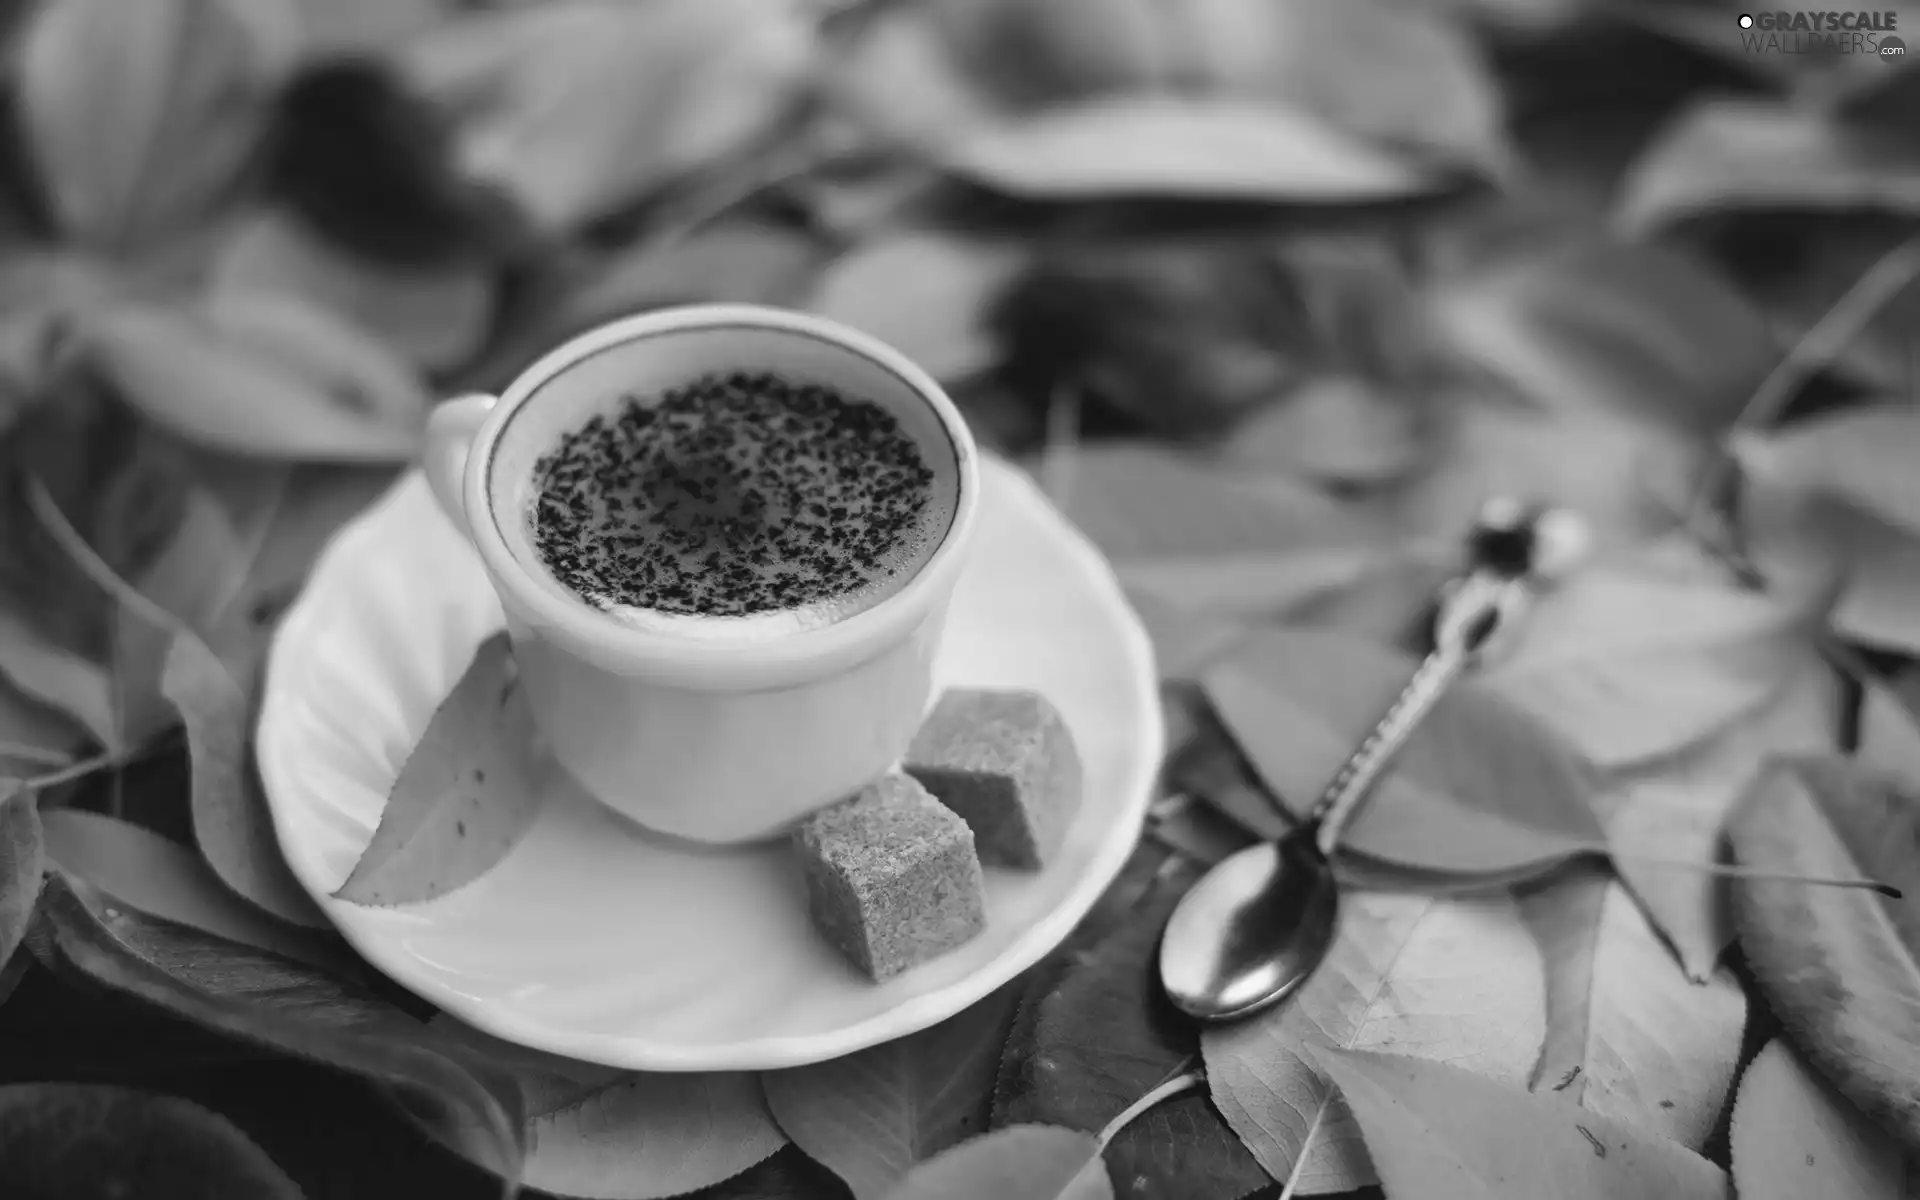 cup, Autumn, Leaf, coffee